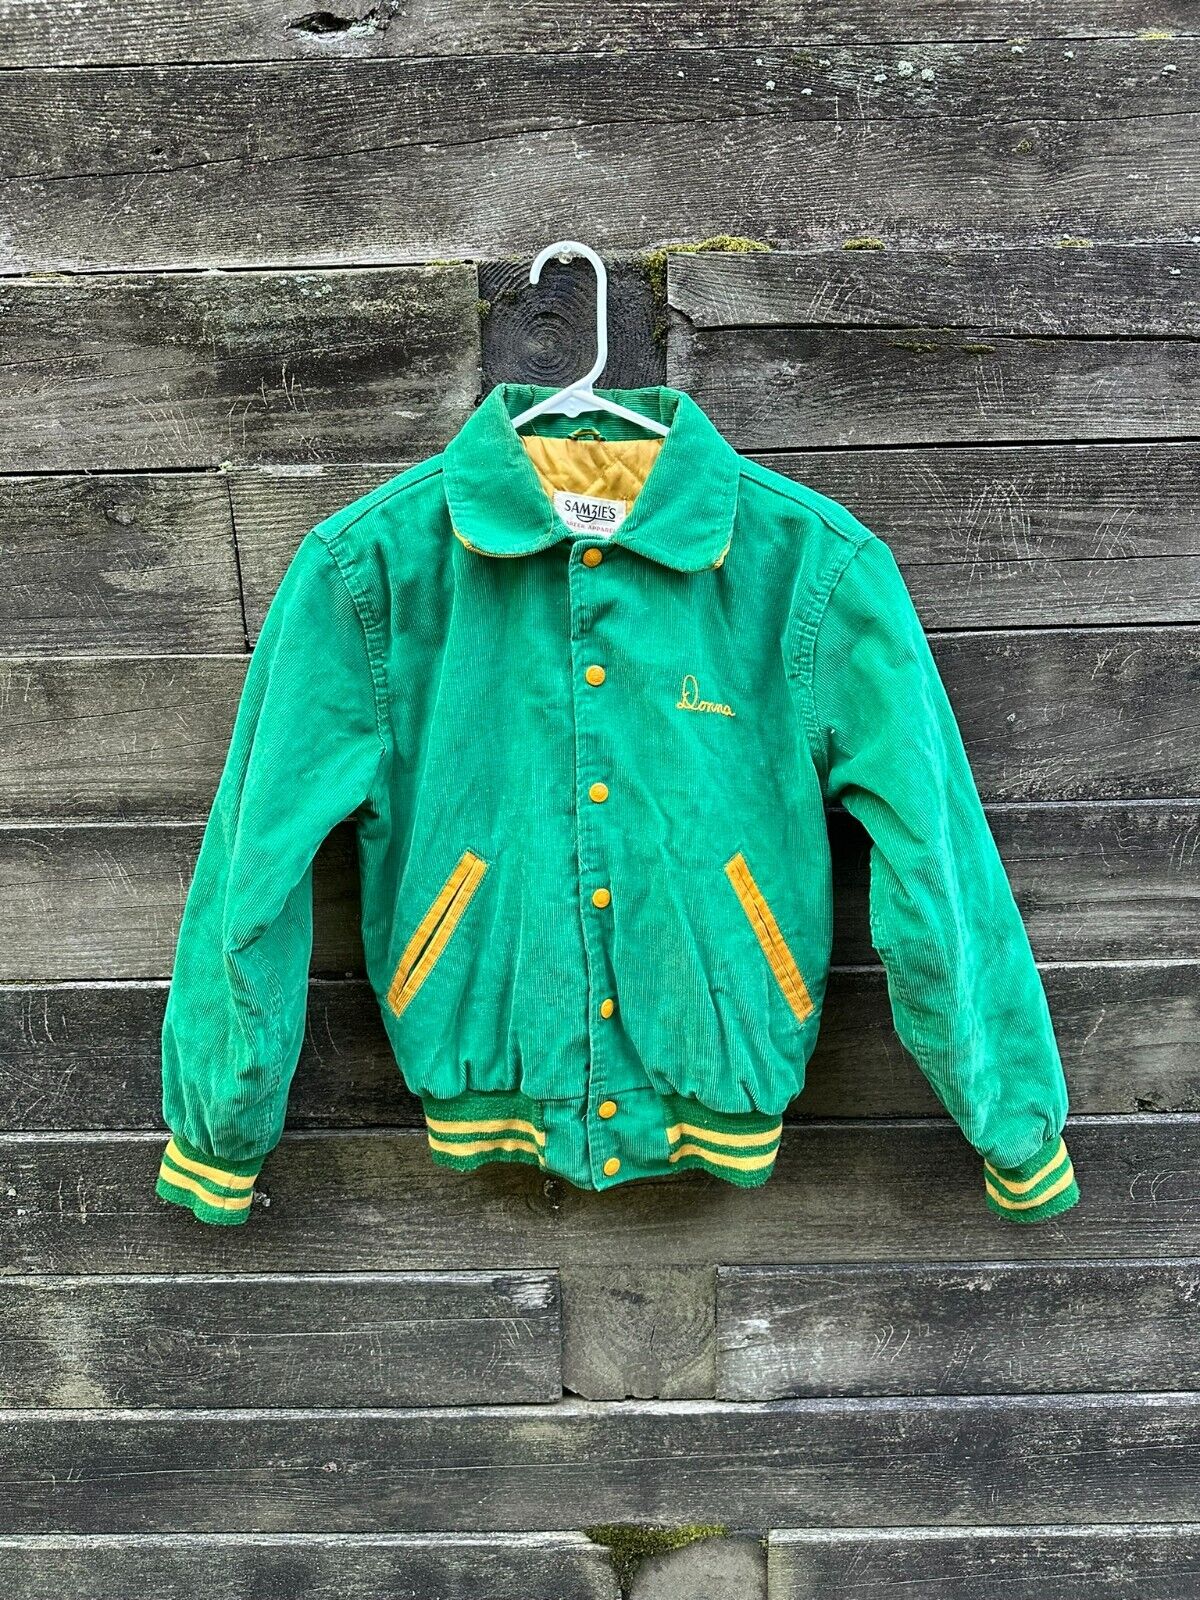 Vintage 80s North Hunterdon High School Letterman Band Jacket used Green